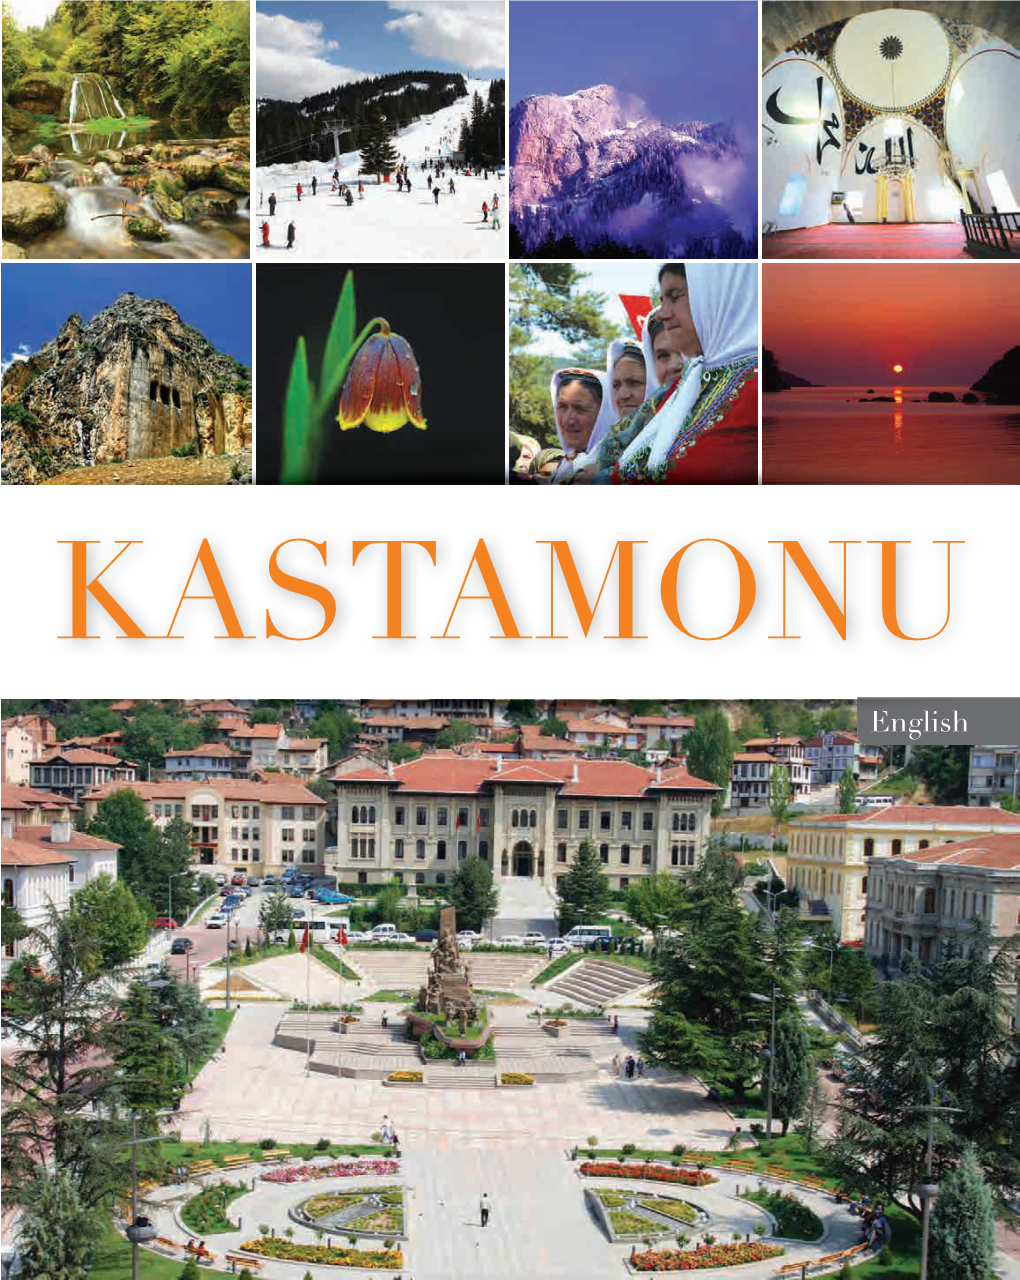 Accommoditions in Kastamonu